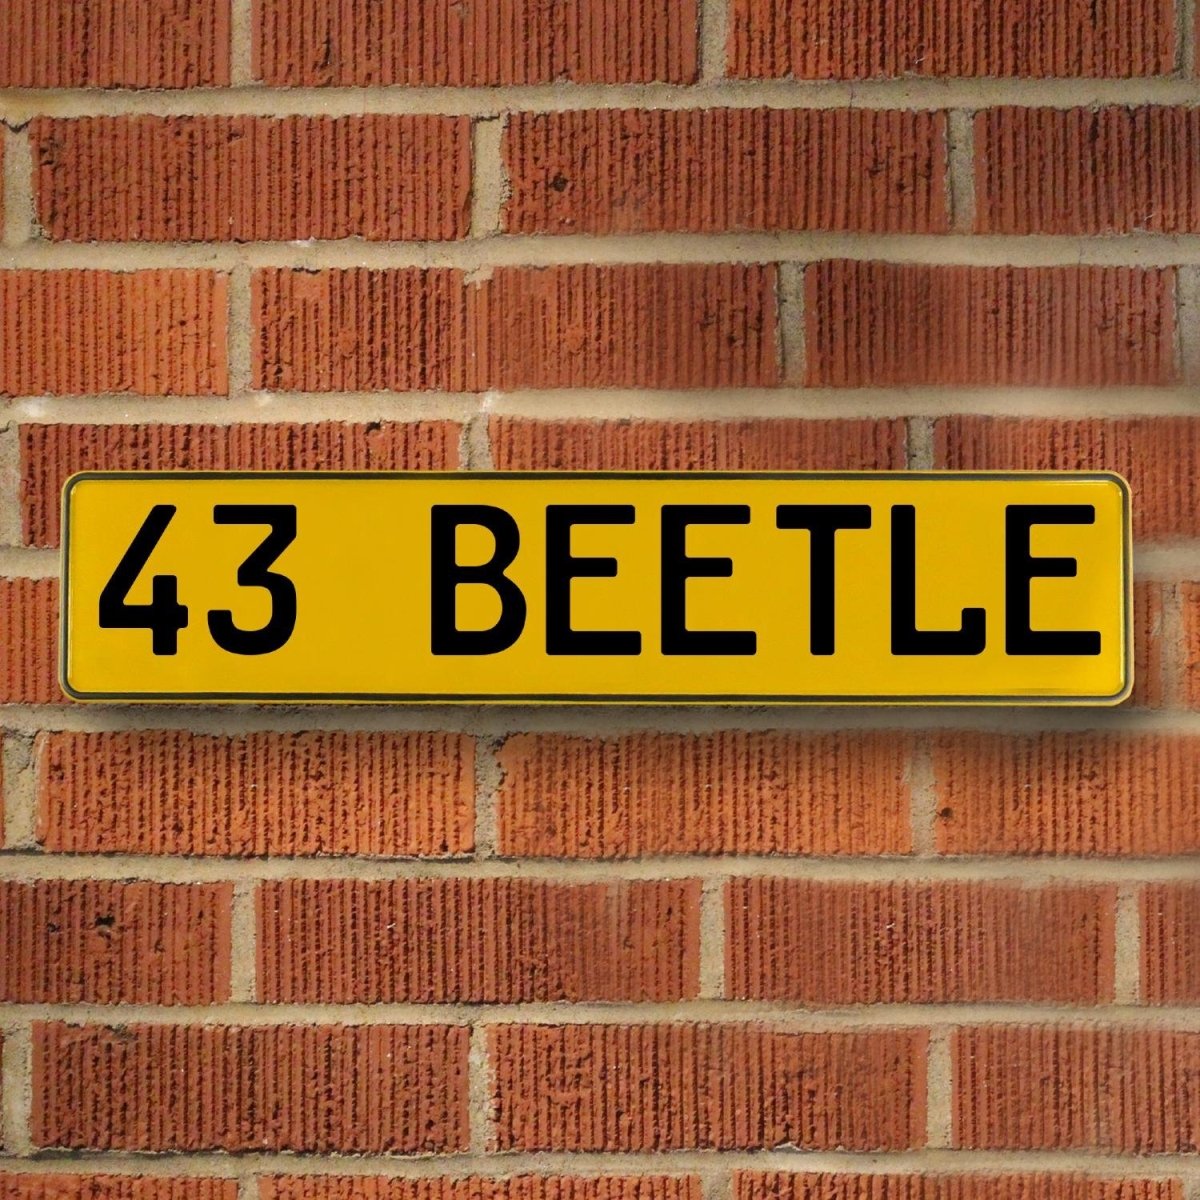 43 Beetle - Yellow Aluminum Street Sign Mancave Euro Plate Name Door Sign Wall